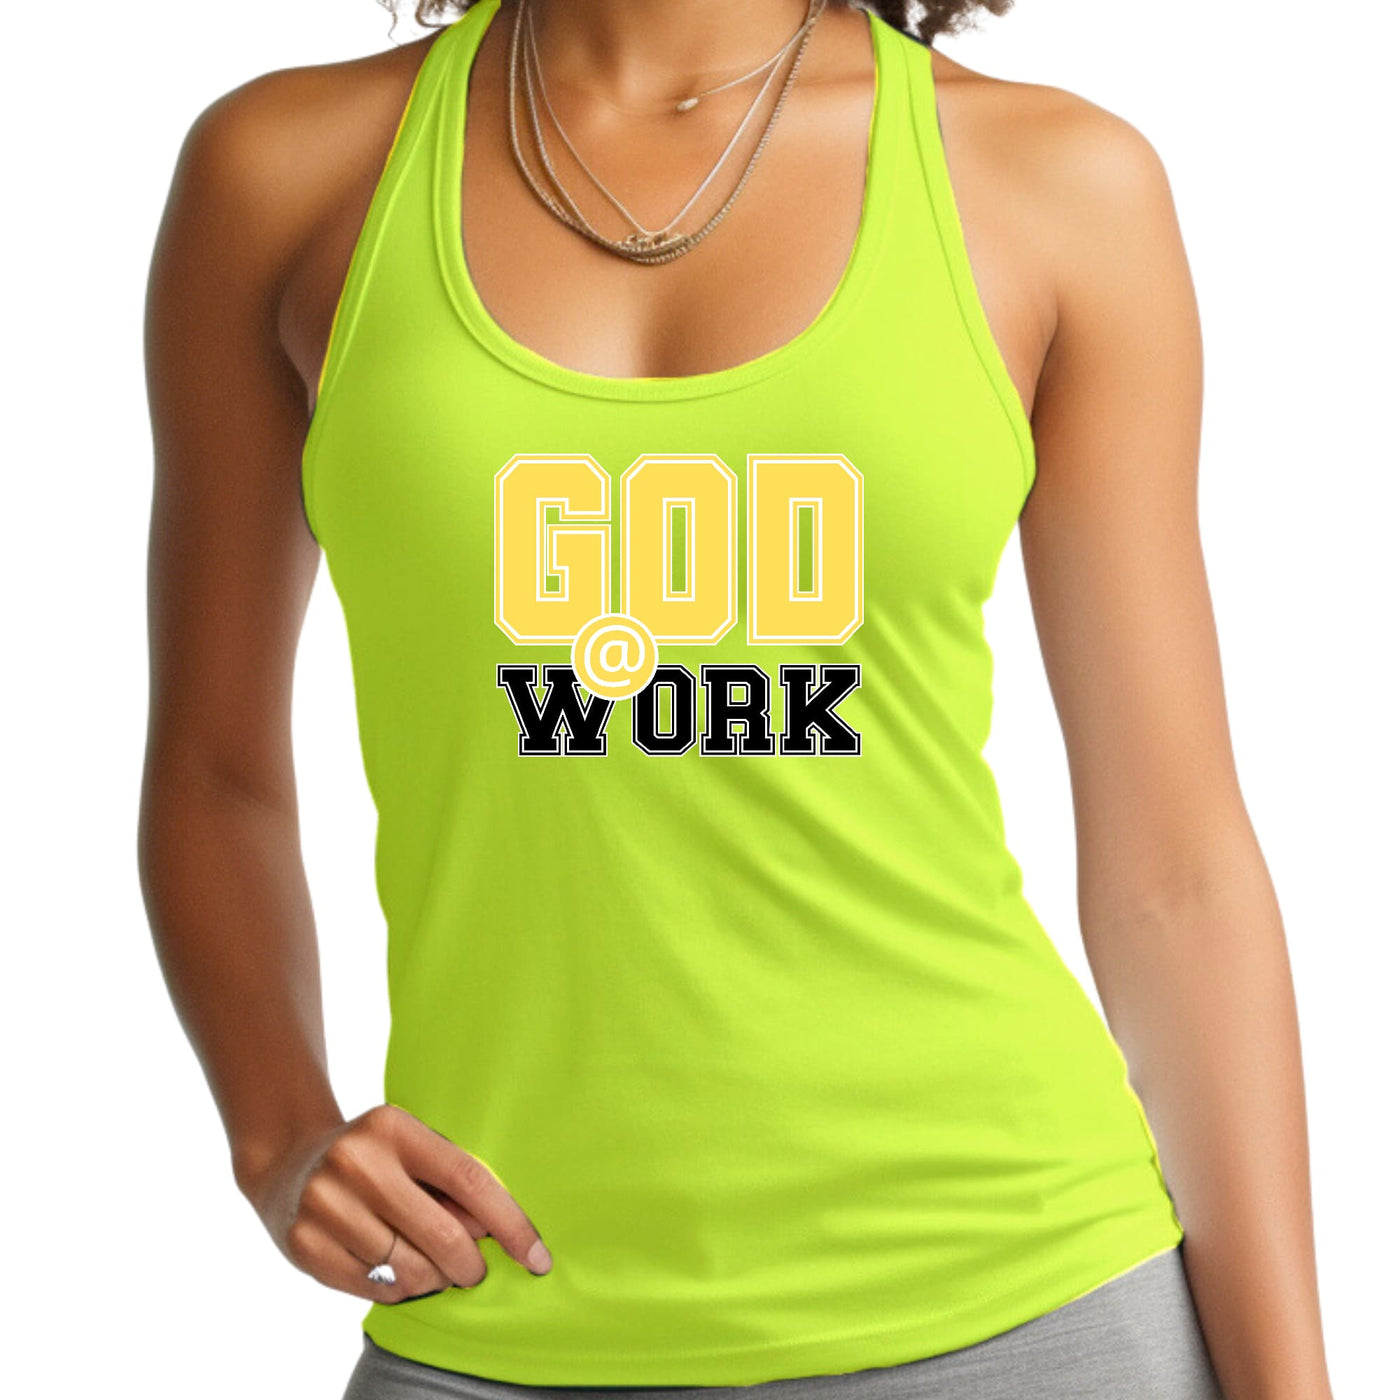 Womens Tank Top Fitness T-shirt God @ Work Yellow And Black Print - Womens